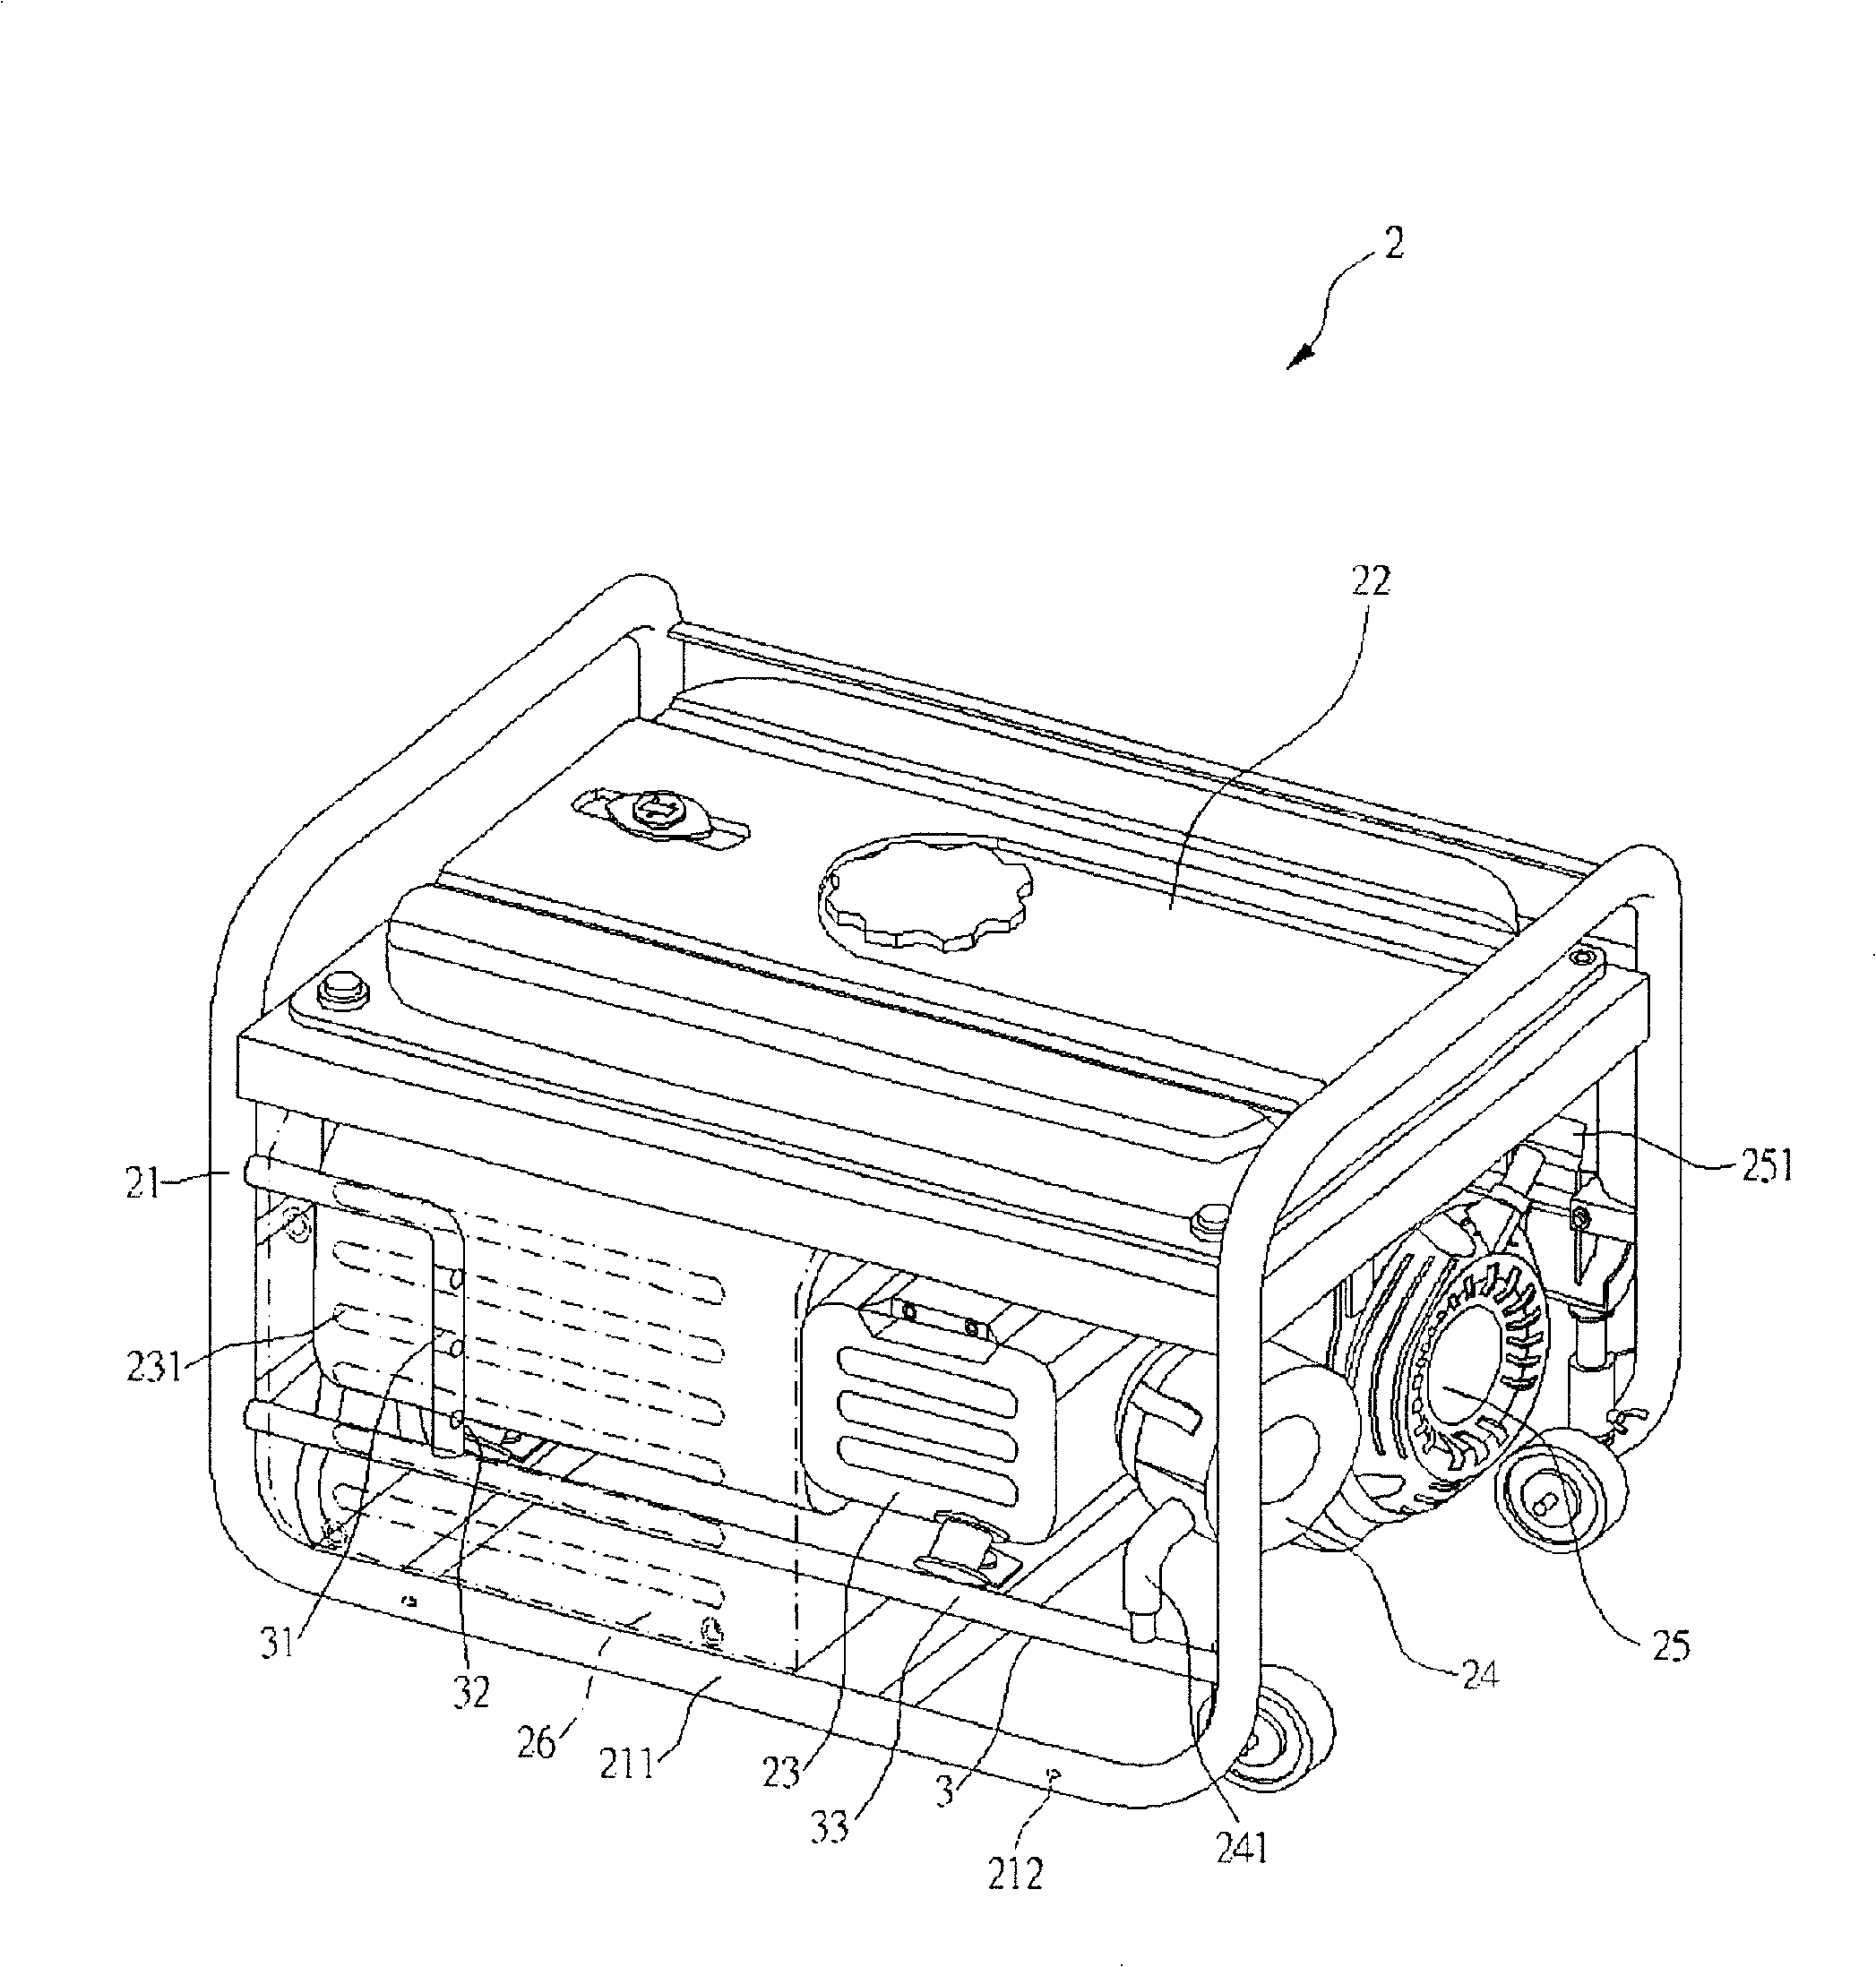 Generator air intake device